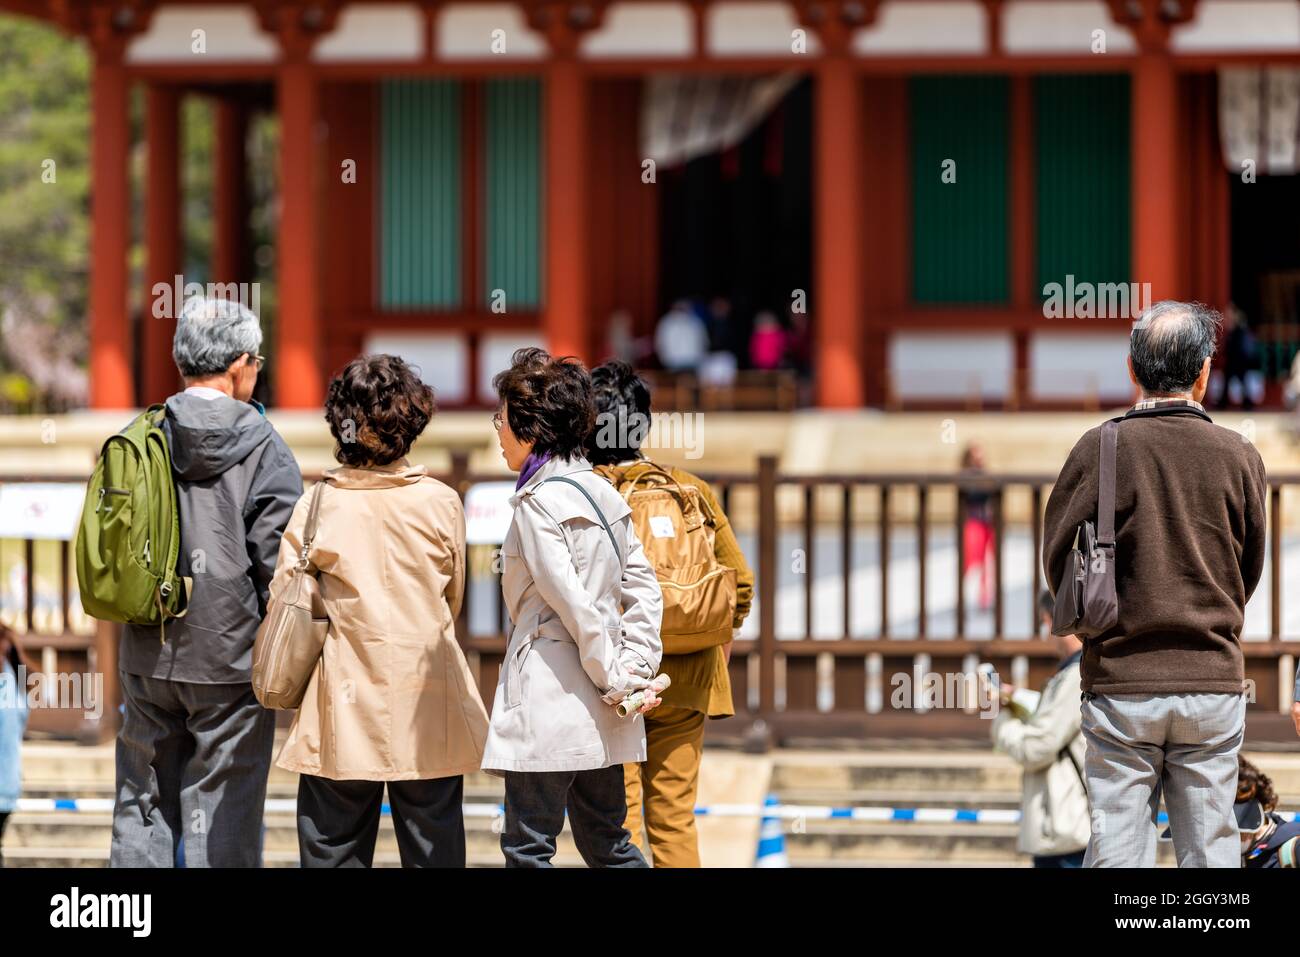 Nara, Japan - April 14, 2019: Group of people tourists looking at famous Kofuku-ji temple Chu-Kondo Central Golden Hall in city Stock Photo